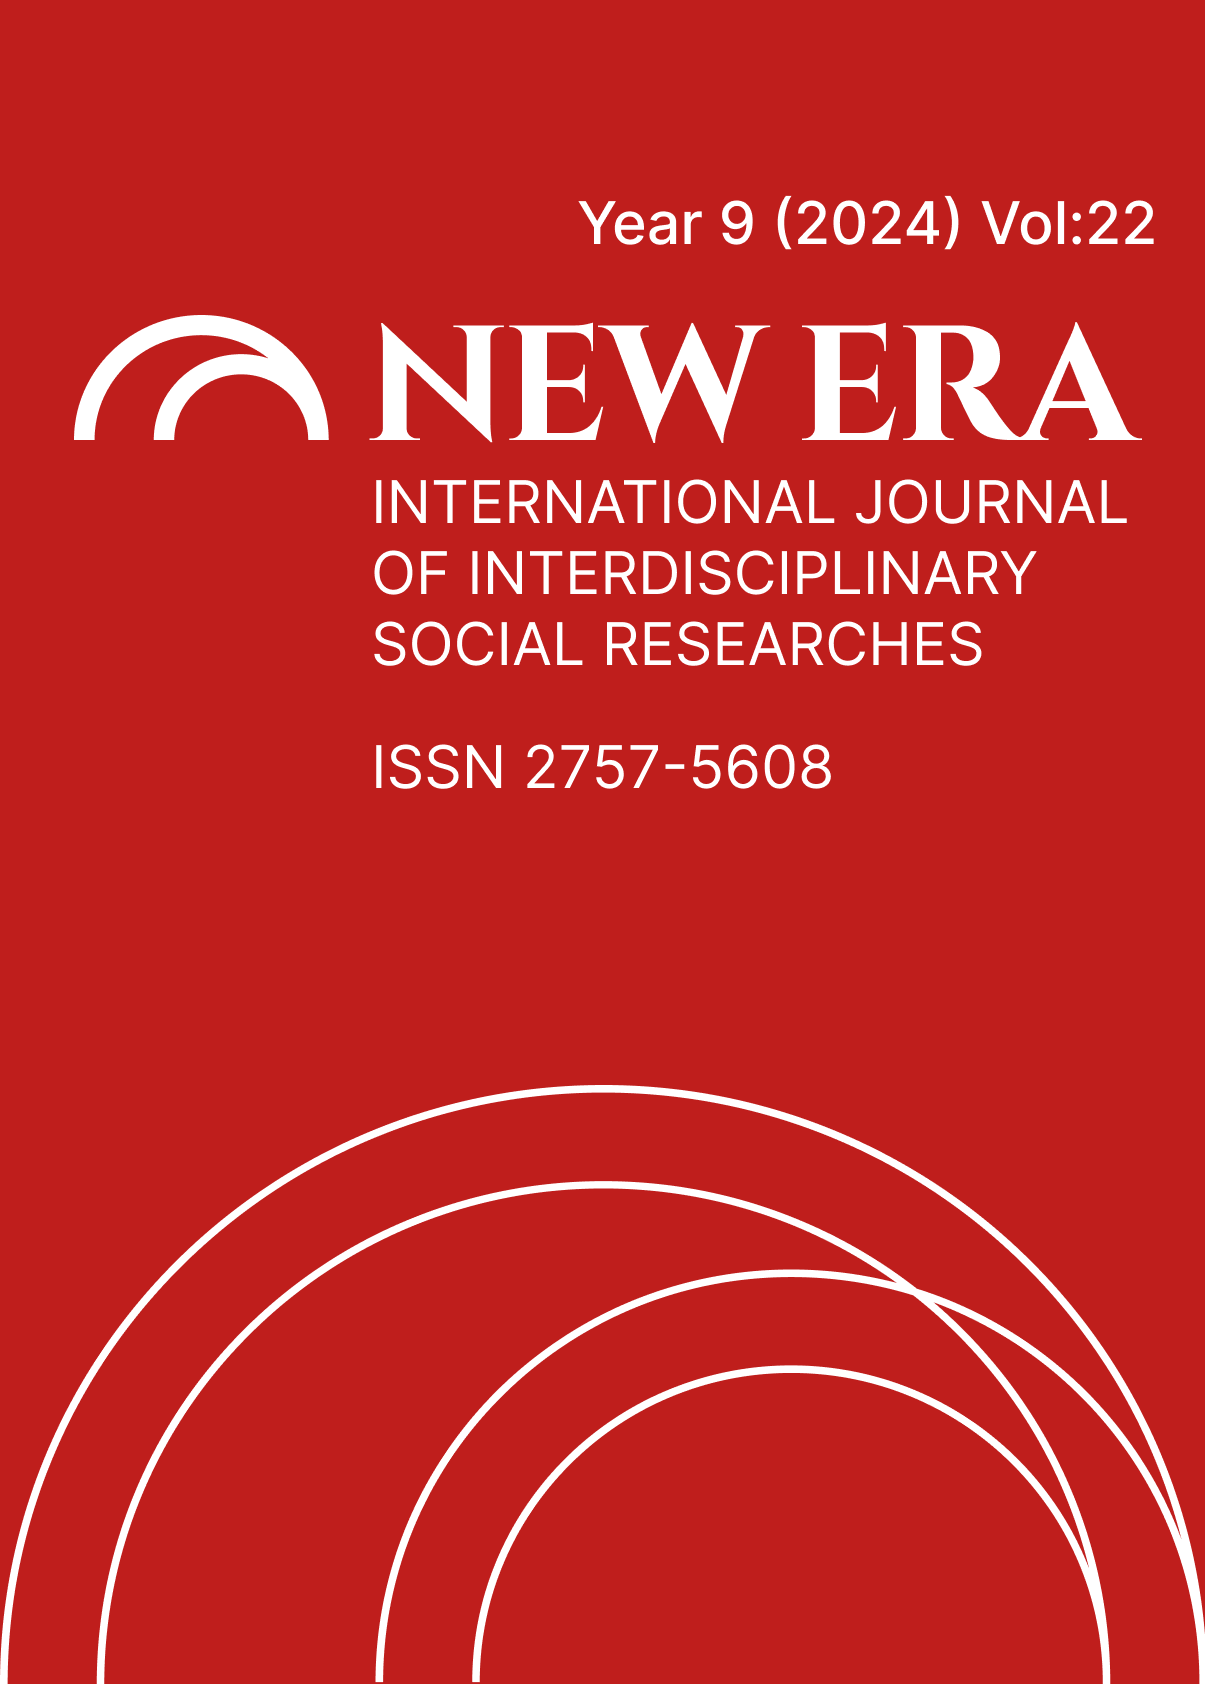 					View Vol. 9 No. 22 (2024): NEW ERA INTERNATIONAL JOURNAL OF INTERDISCIPLINARY SOCIAL RESEARCHES
				